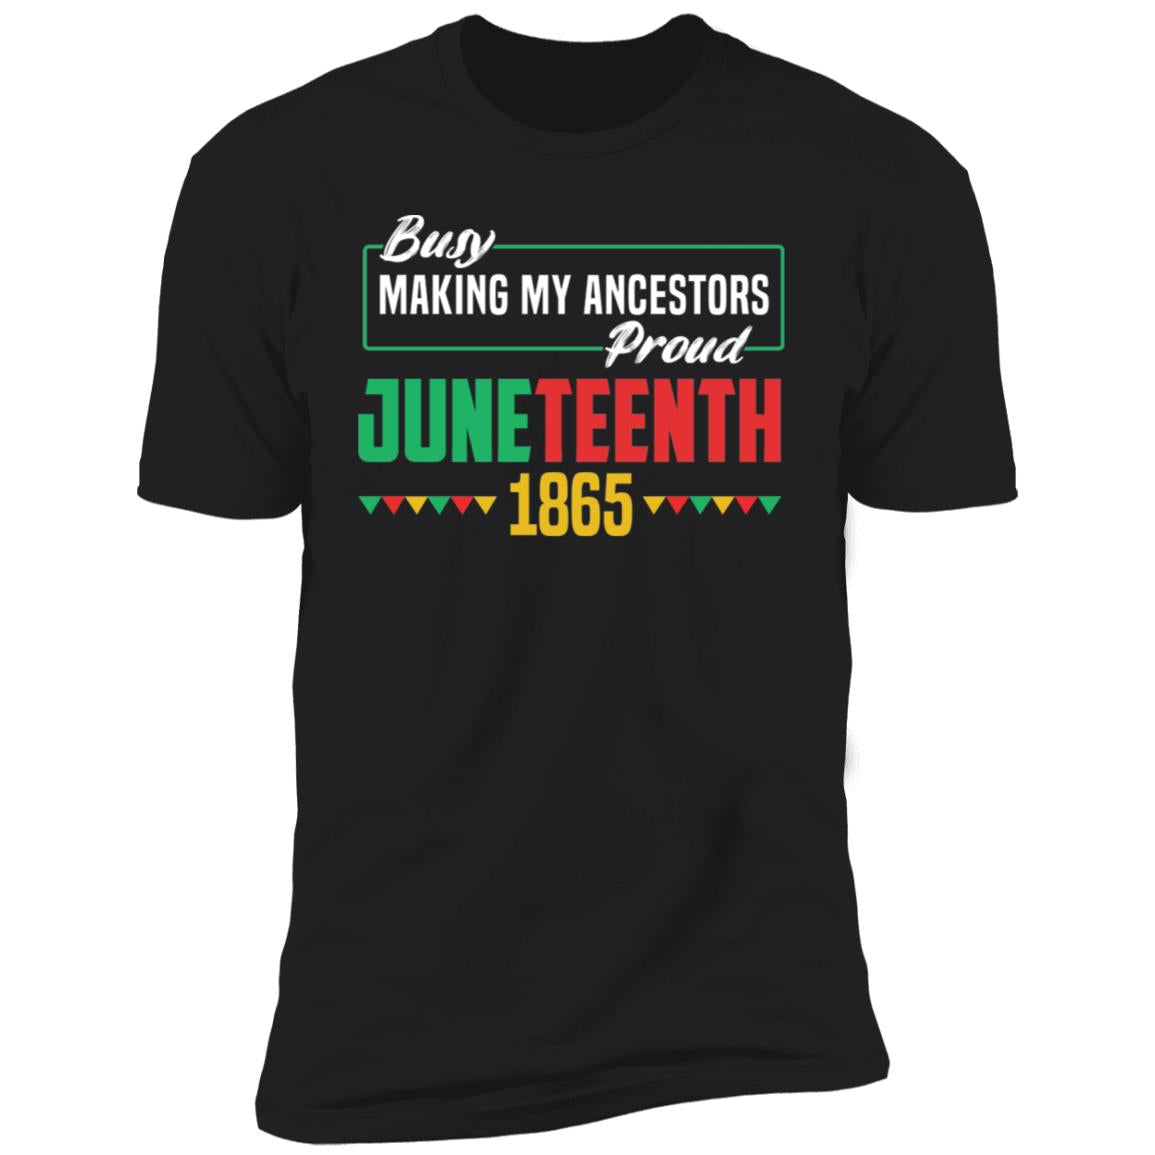 Busy Making My Ancestors Proud - Juneteenth T-shirt Apparel Gearment Premium T-Shirt Black S